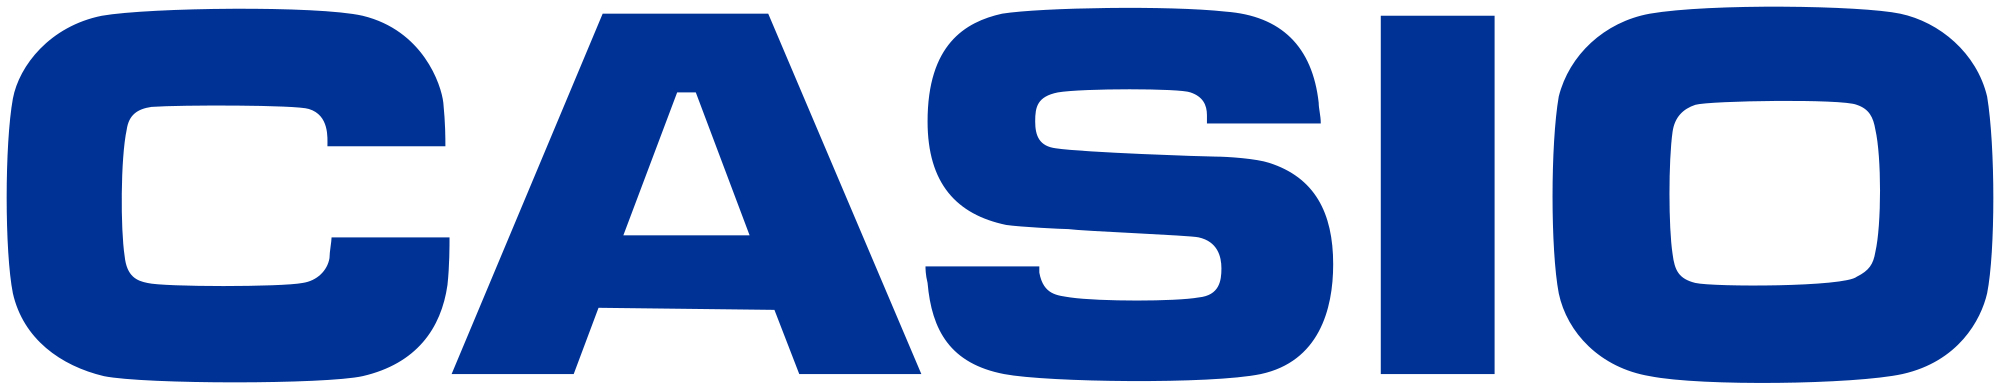 Casio Logo - File:Casio logo.svg - Wikimedia Commons